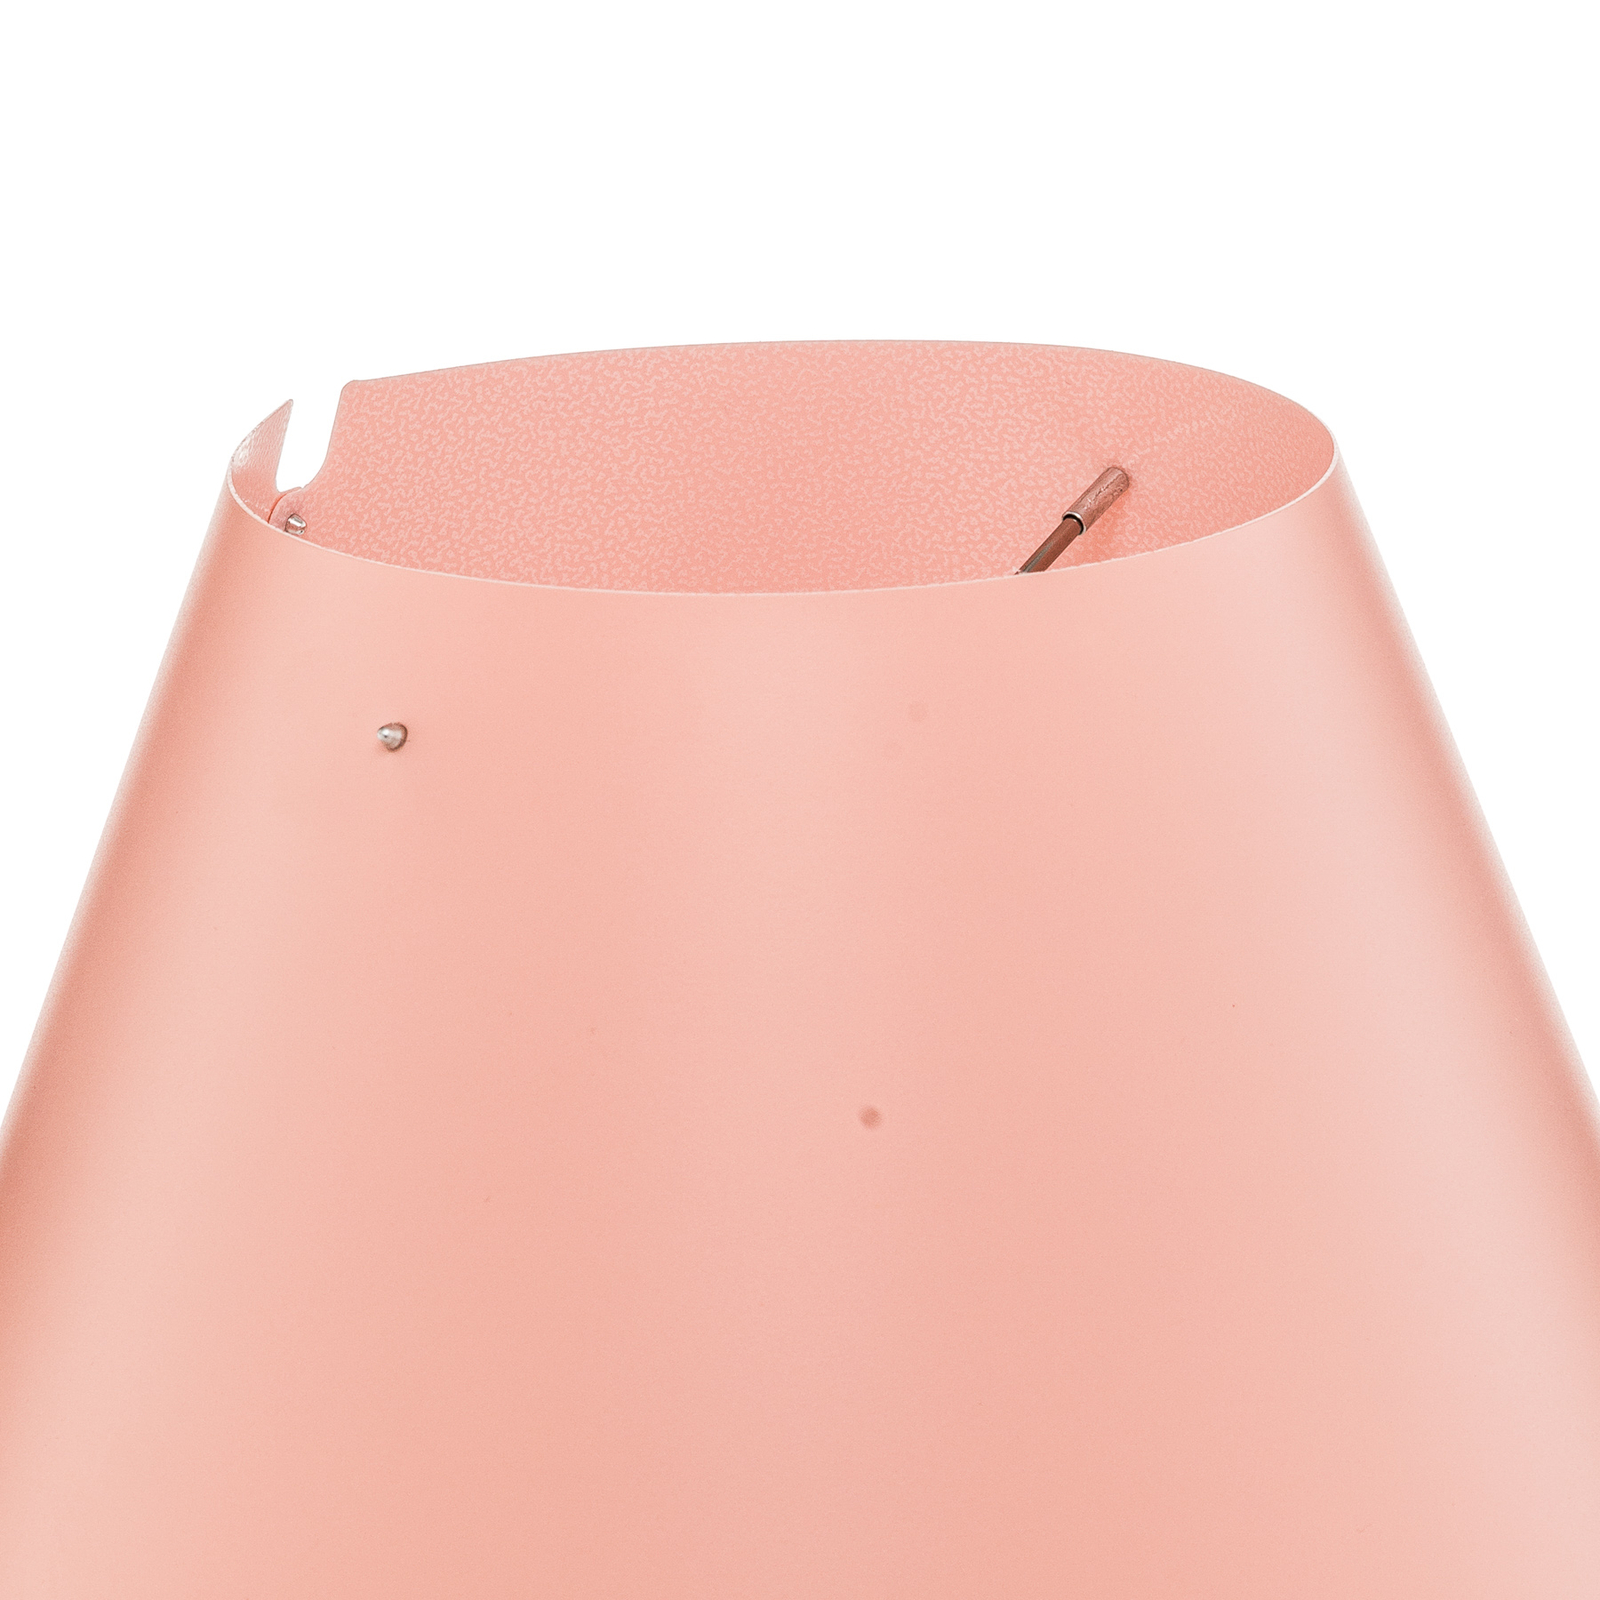 Luceplan Costanzina table lamp alu, pink